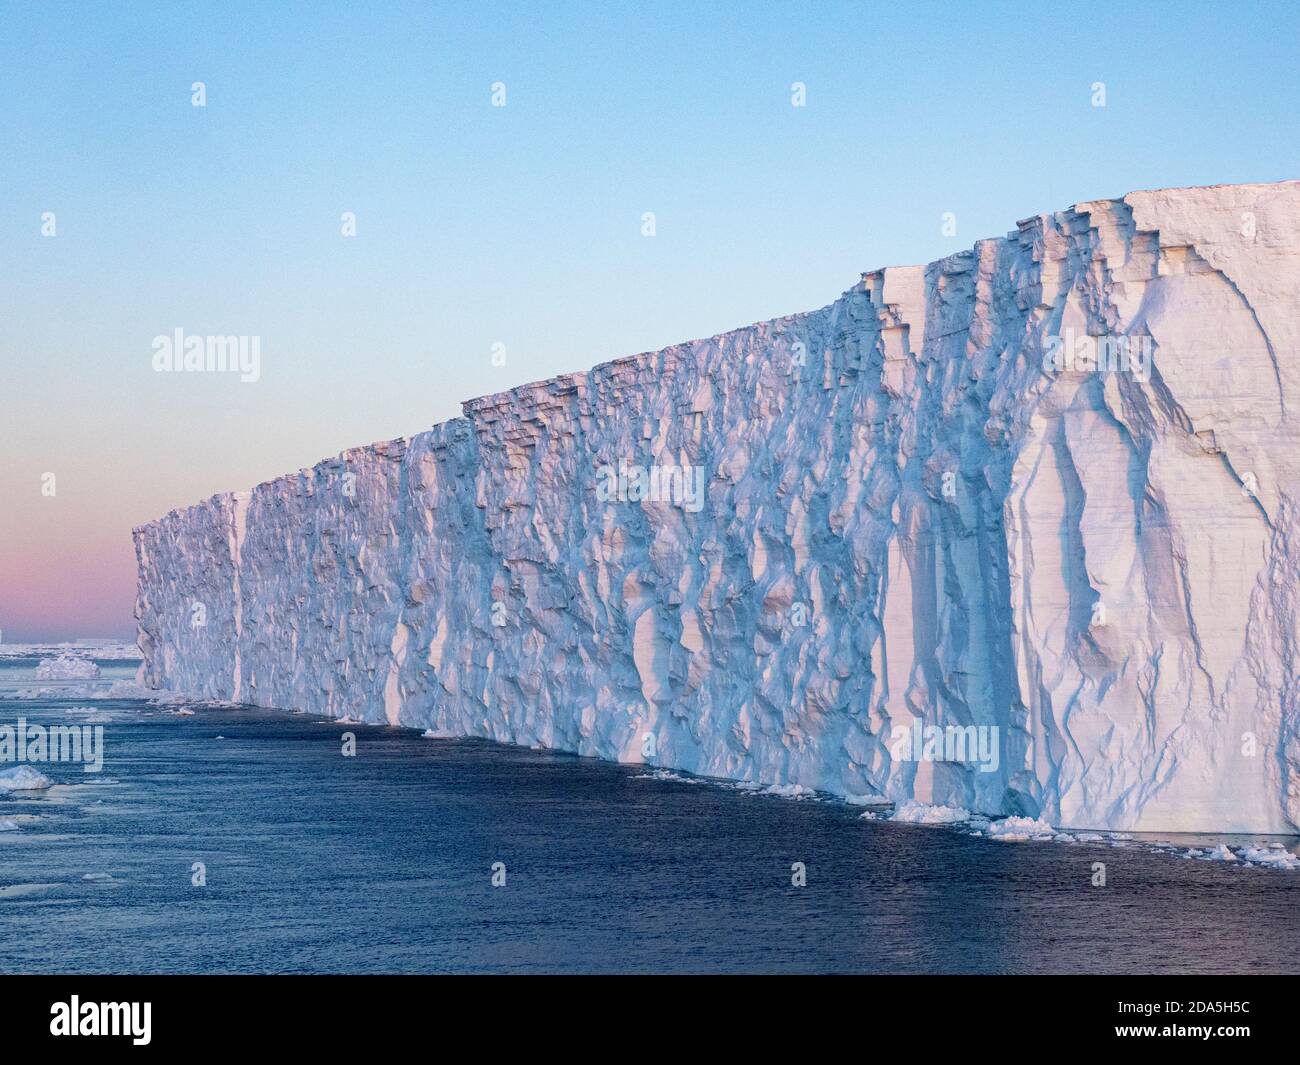 Sea ice, tabular icebergs, and brash ice in Erebus and Terror Gulf, Weddell Sea, Antarctica. Stock Photo